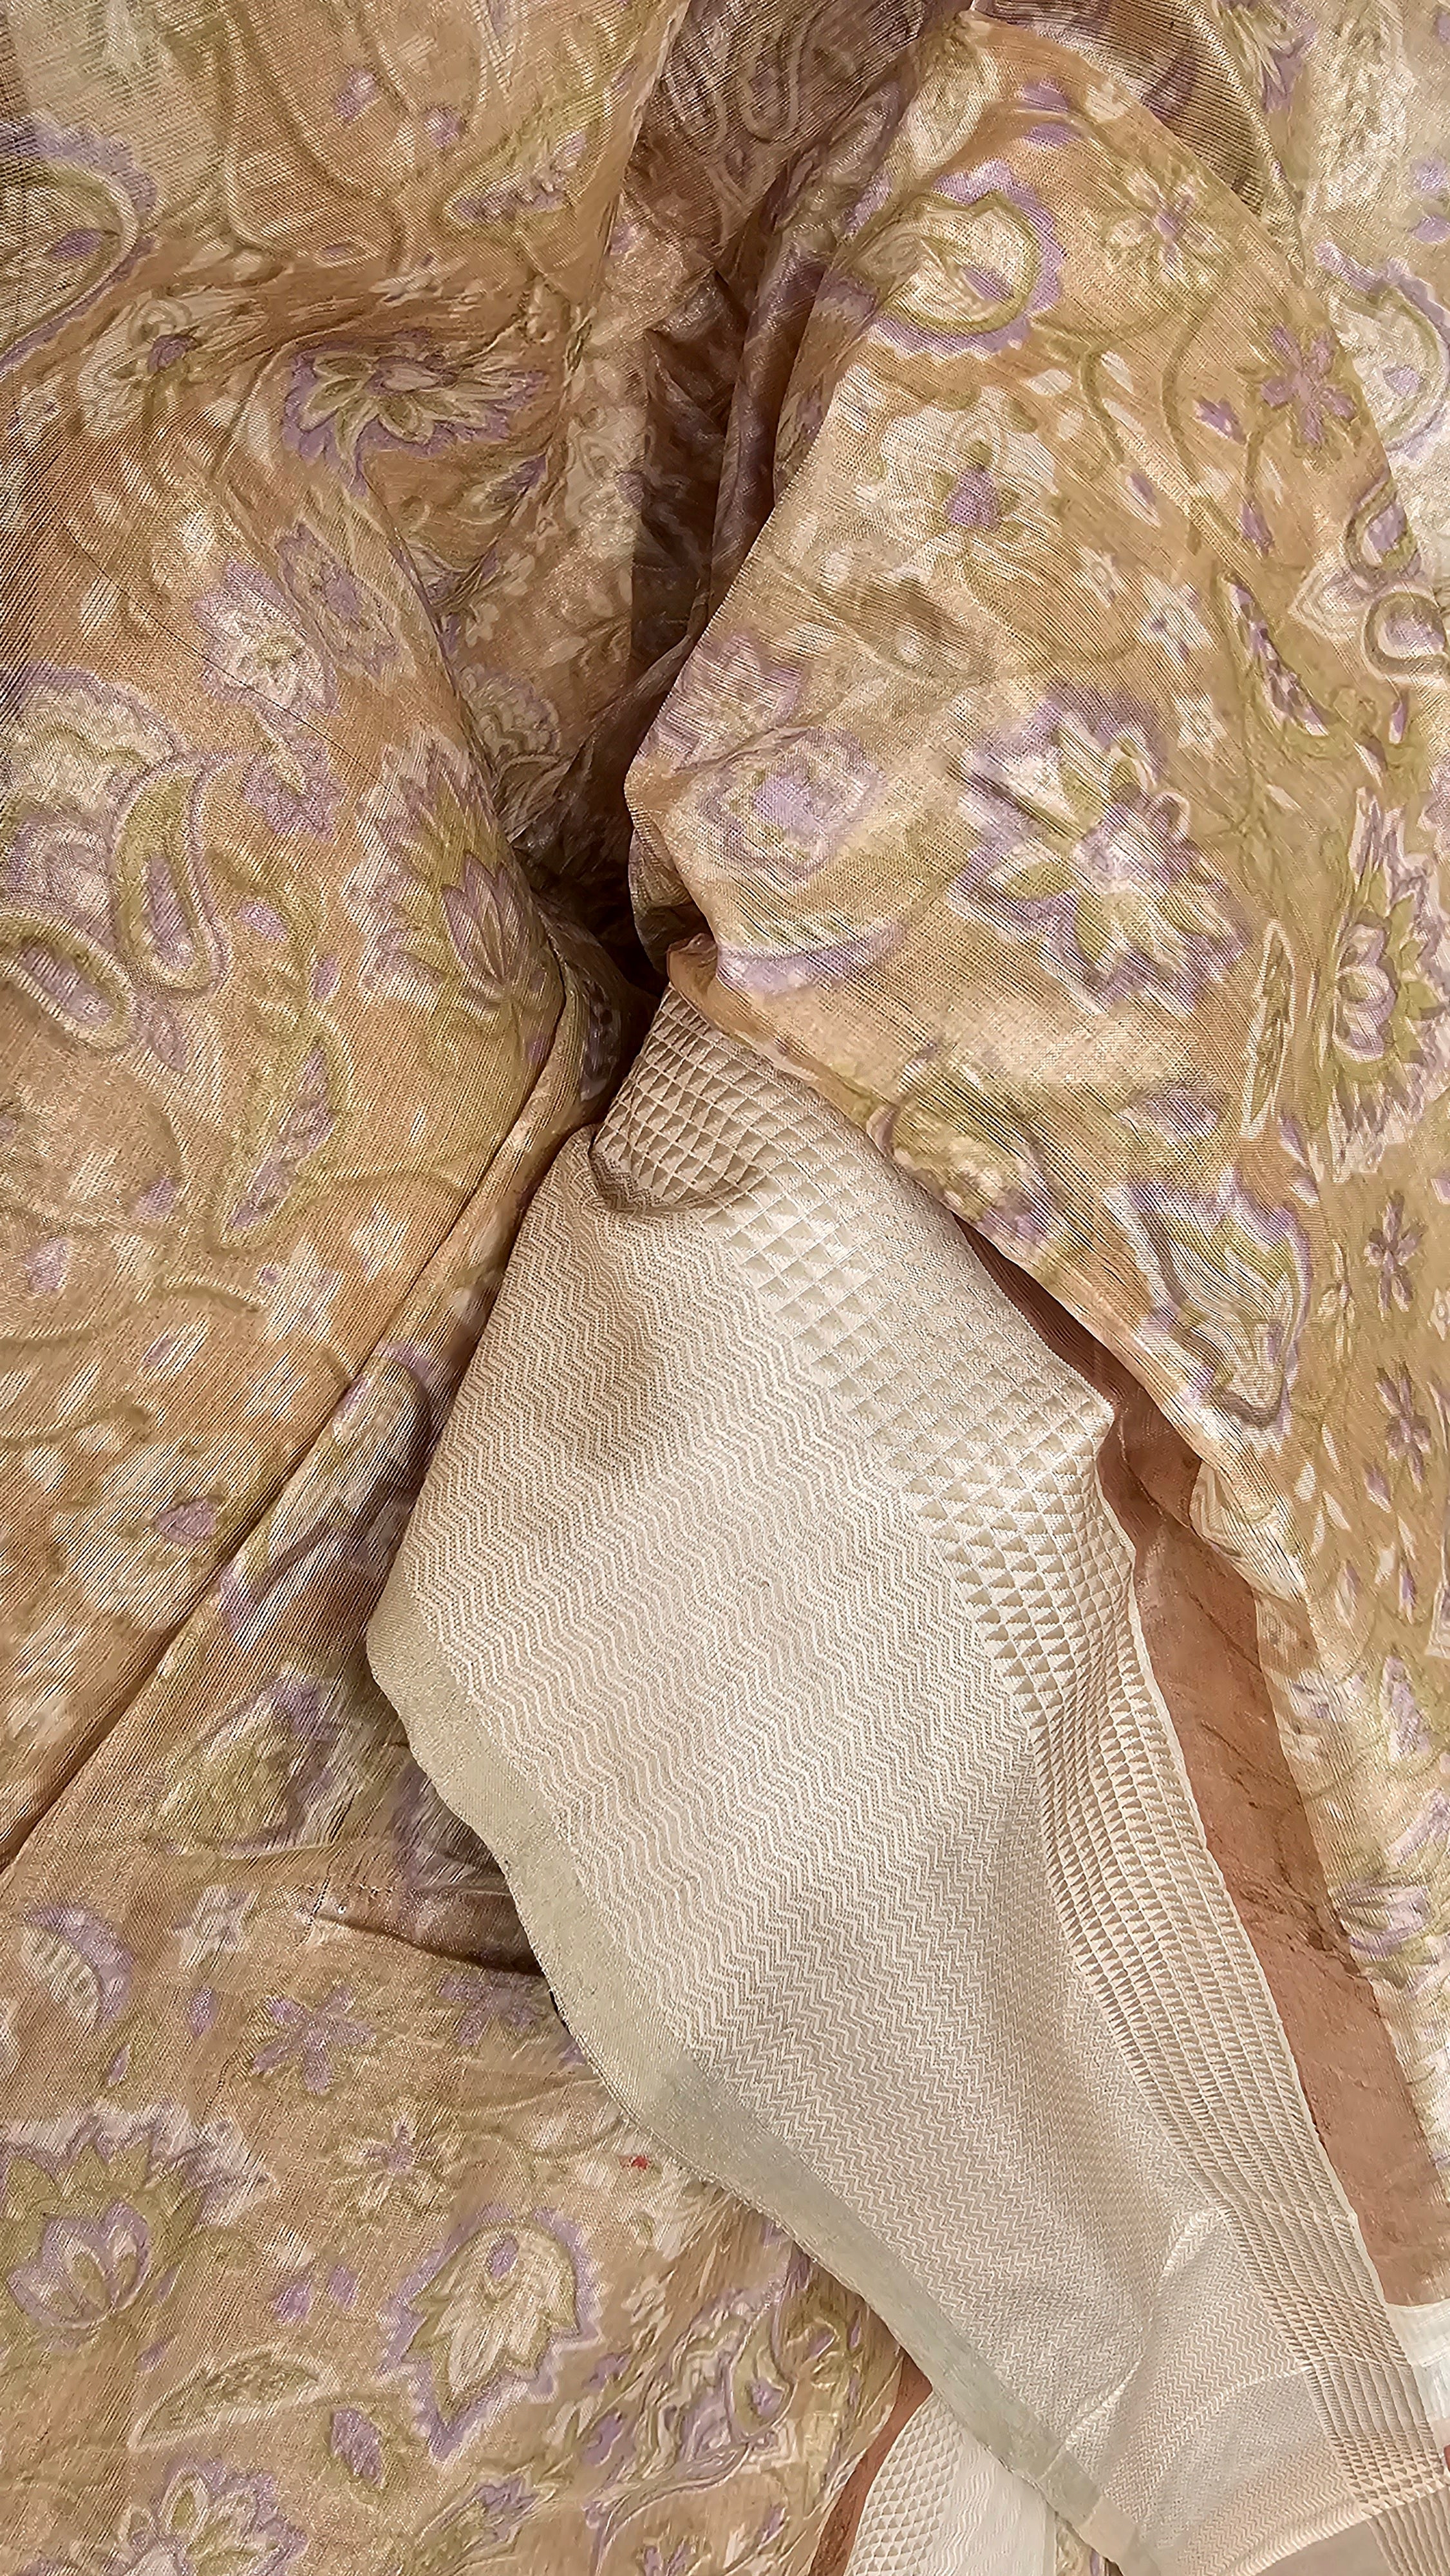 Silver Tissue Pure Cotton Saree with Thread Borders and Multicolor Prints.